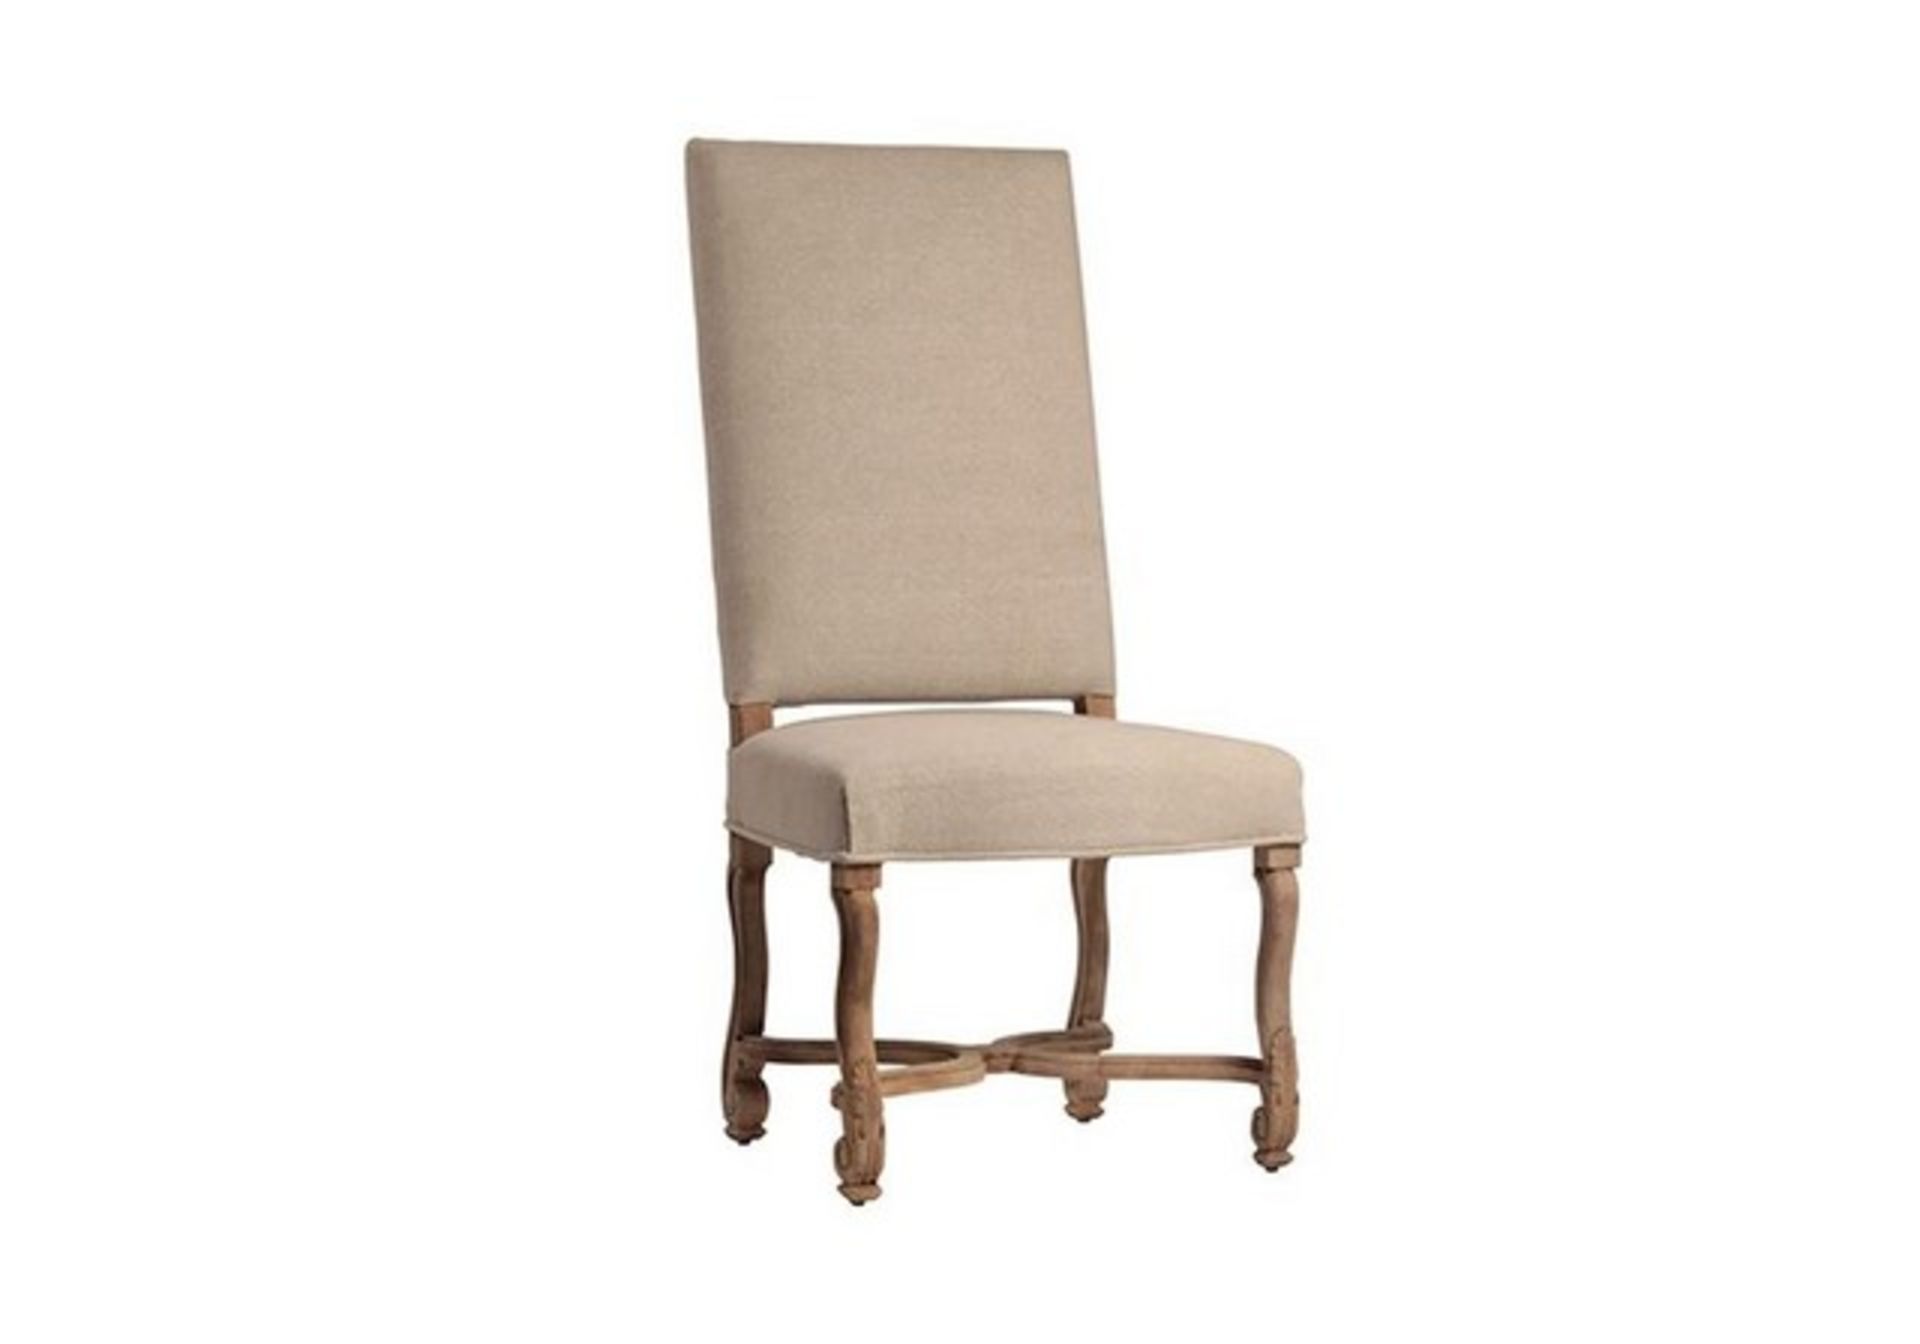 Santa Ynez Cloister Chair - Image 2 of 2